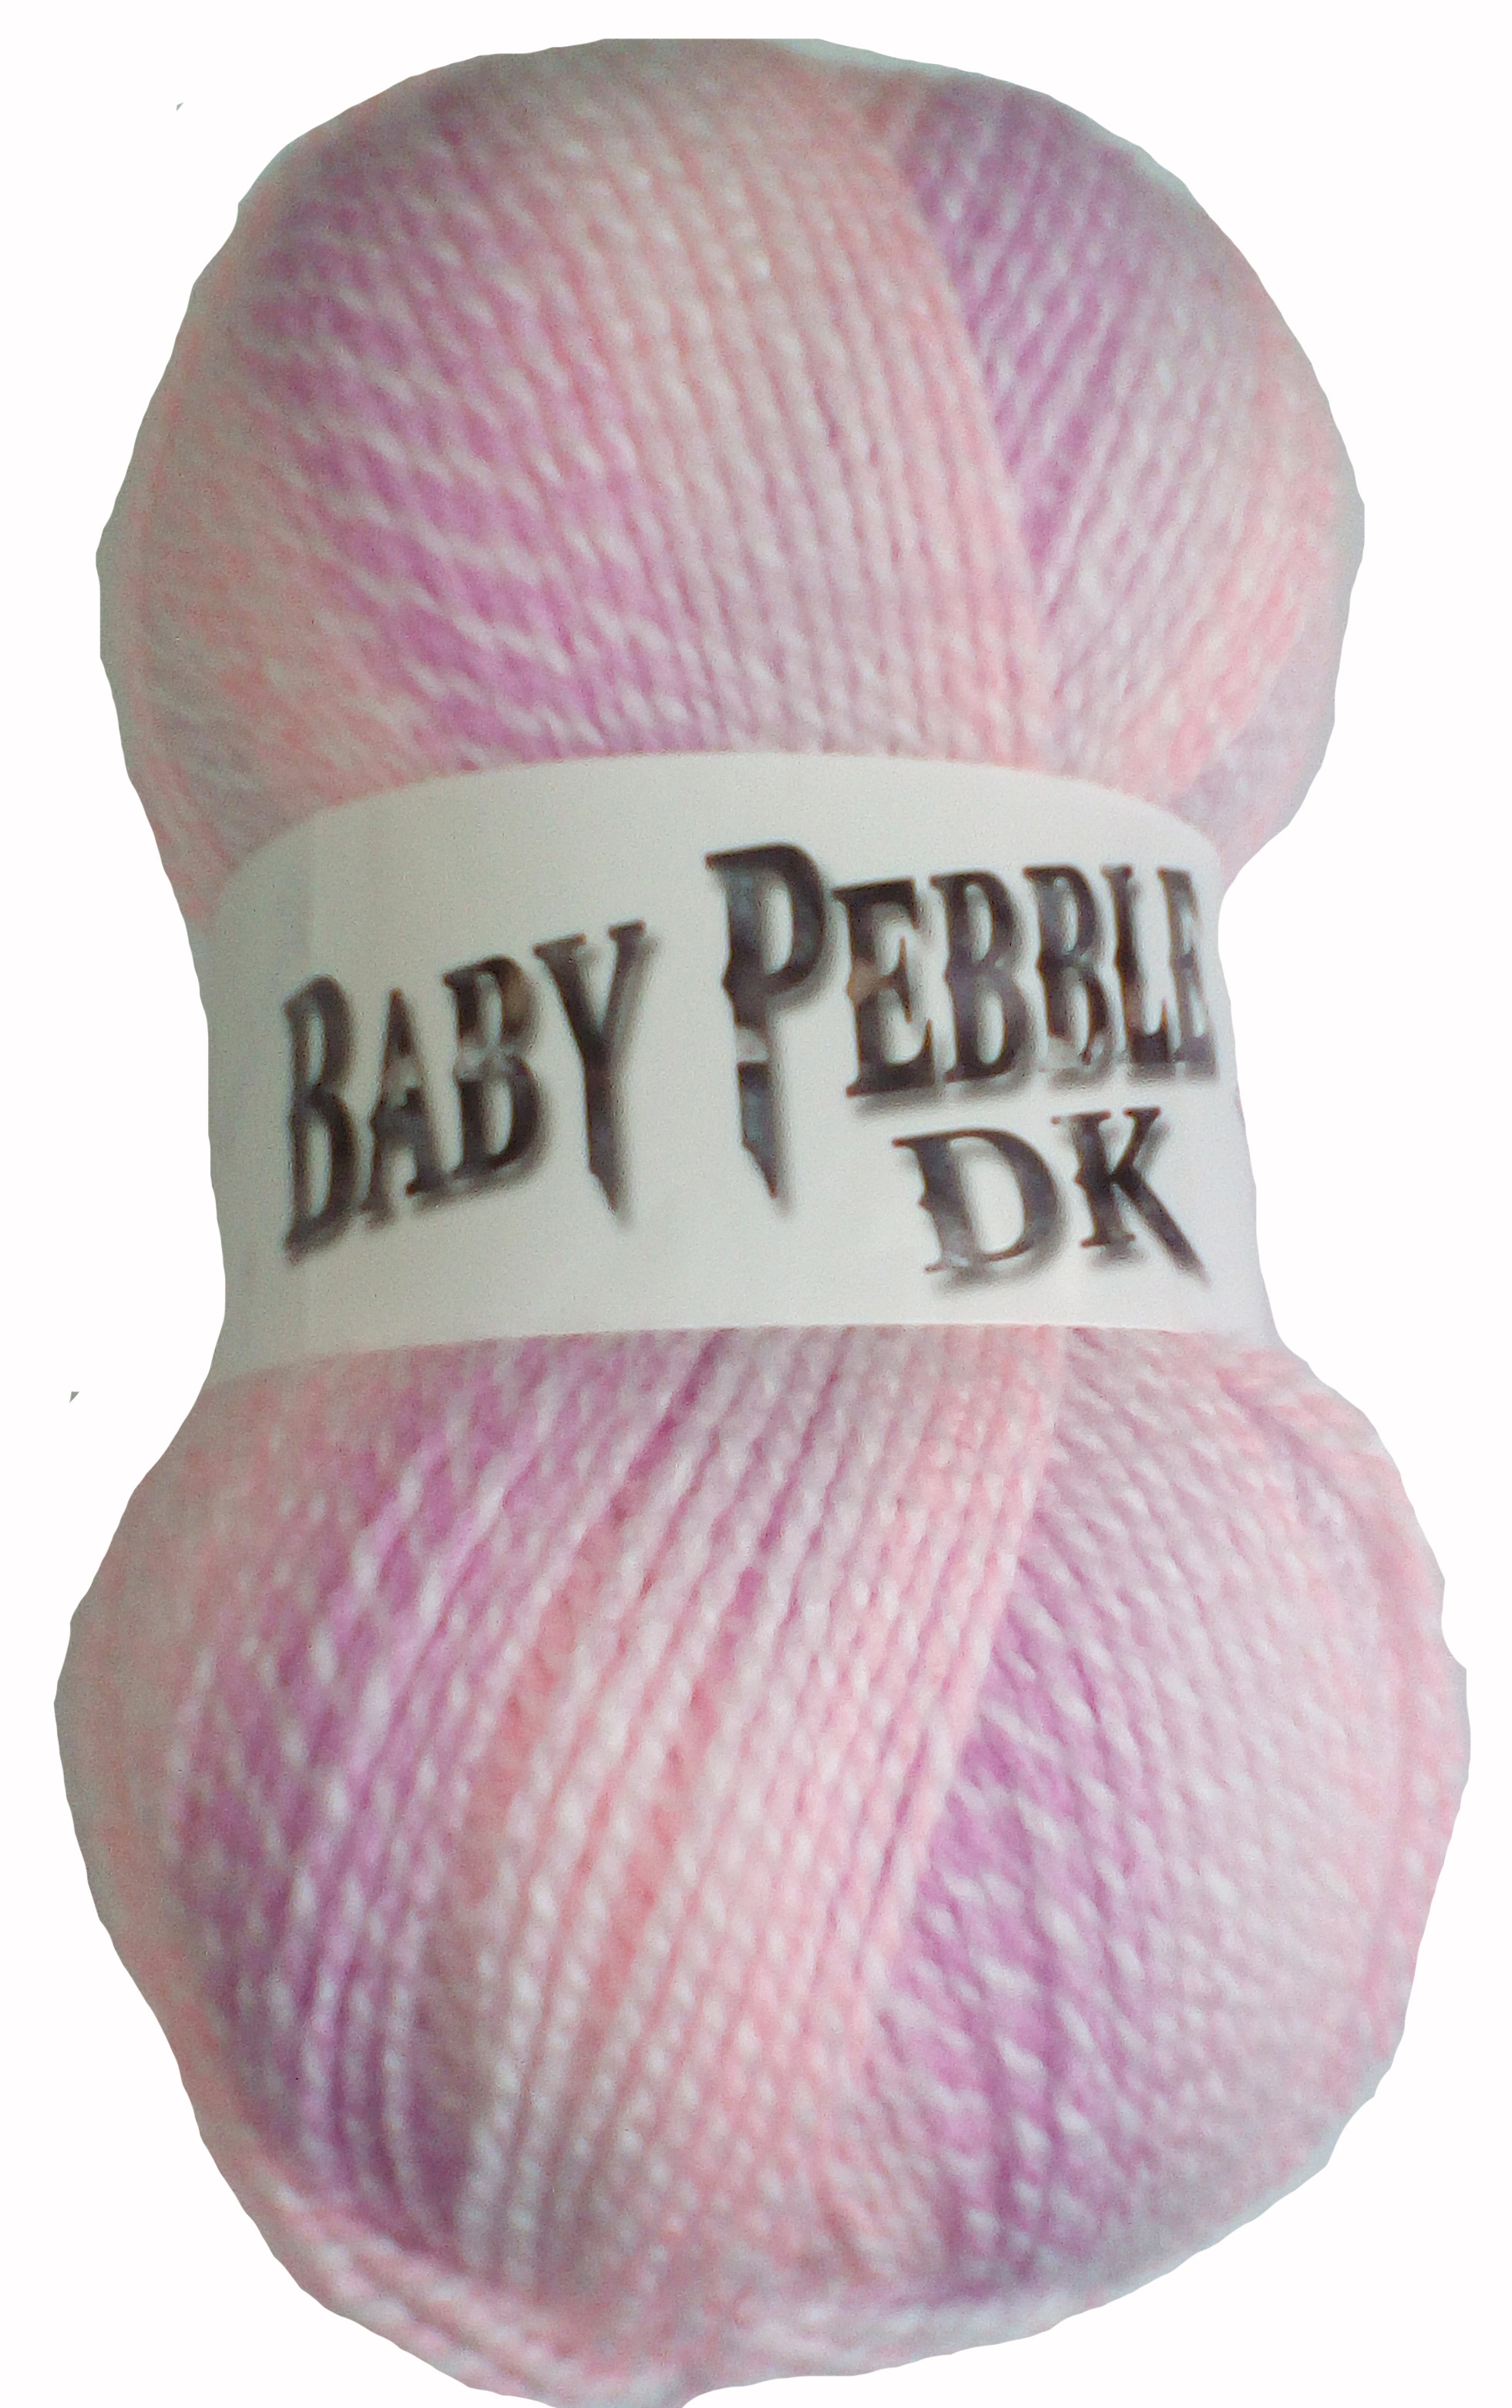 Baby Pebble 10x100g Balls Gelato 105 - Click Image to Close